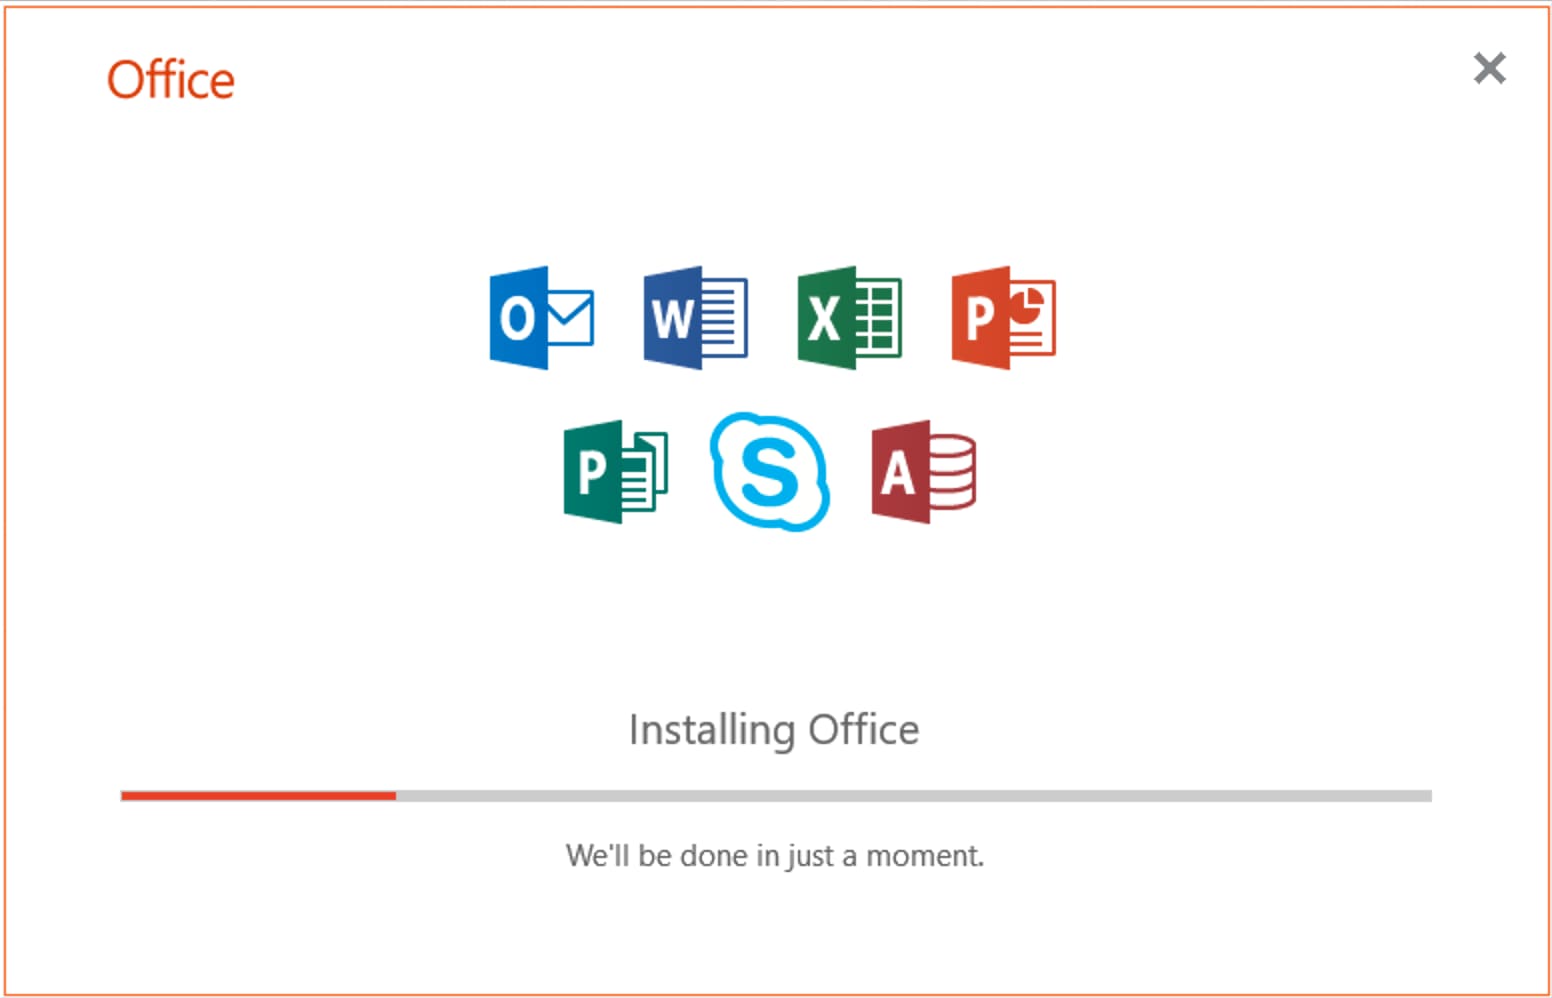 Microsoft download tool 365. Установщик Microsoft Office. Microsoft Office 2019. Установщик Office. Установка офиса.